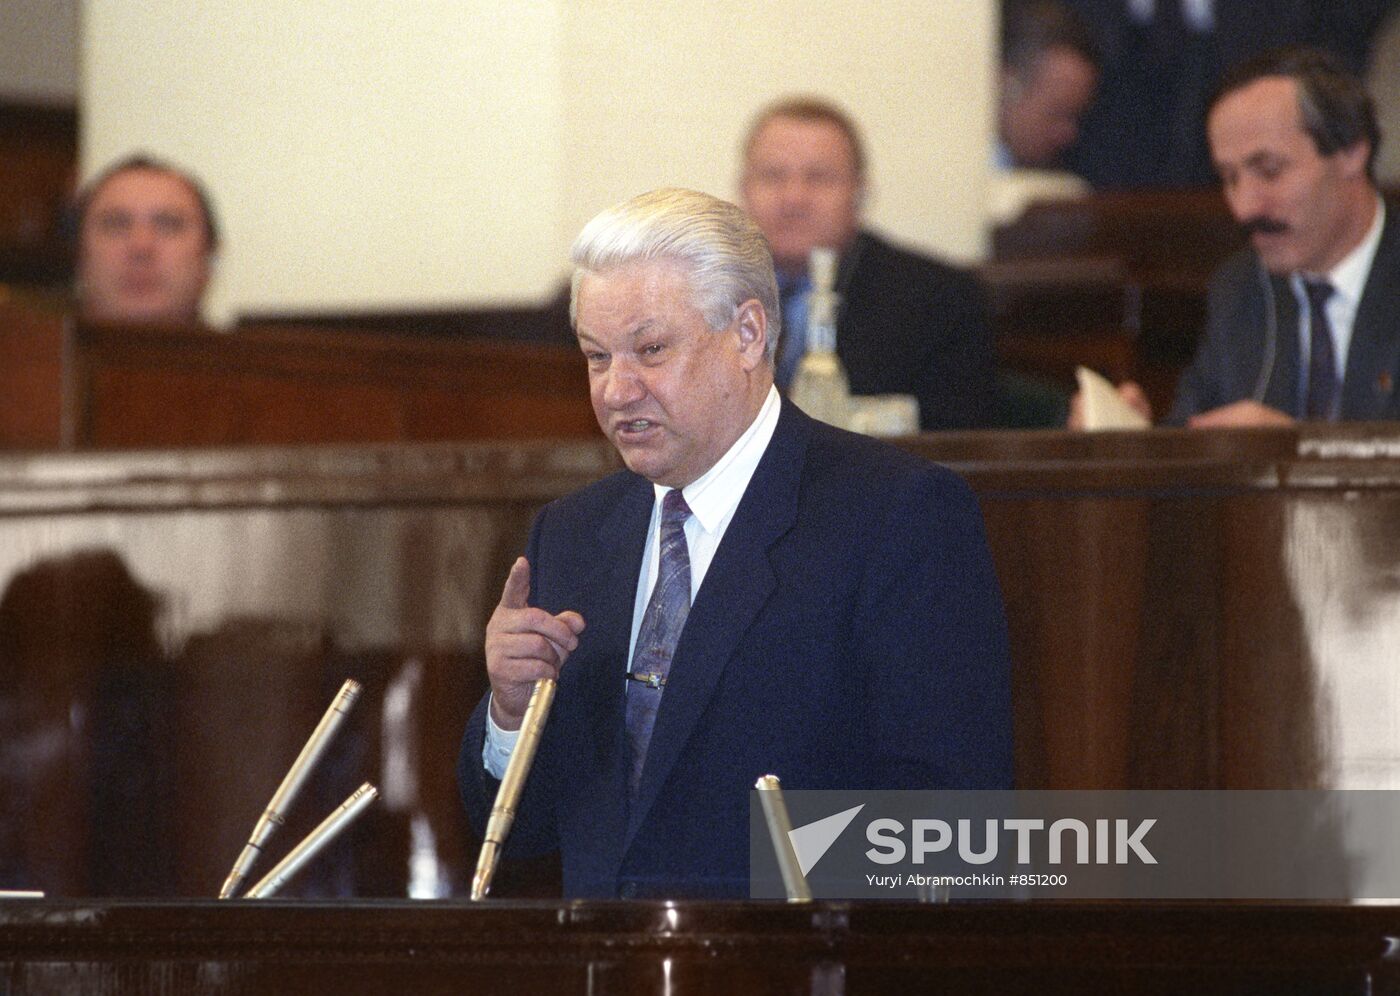 Boris Yeltsin delivering speech